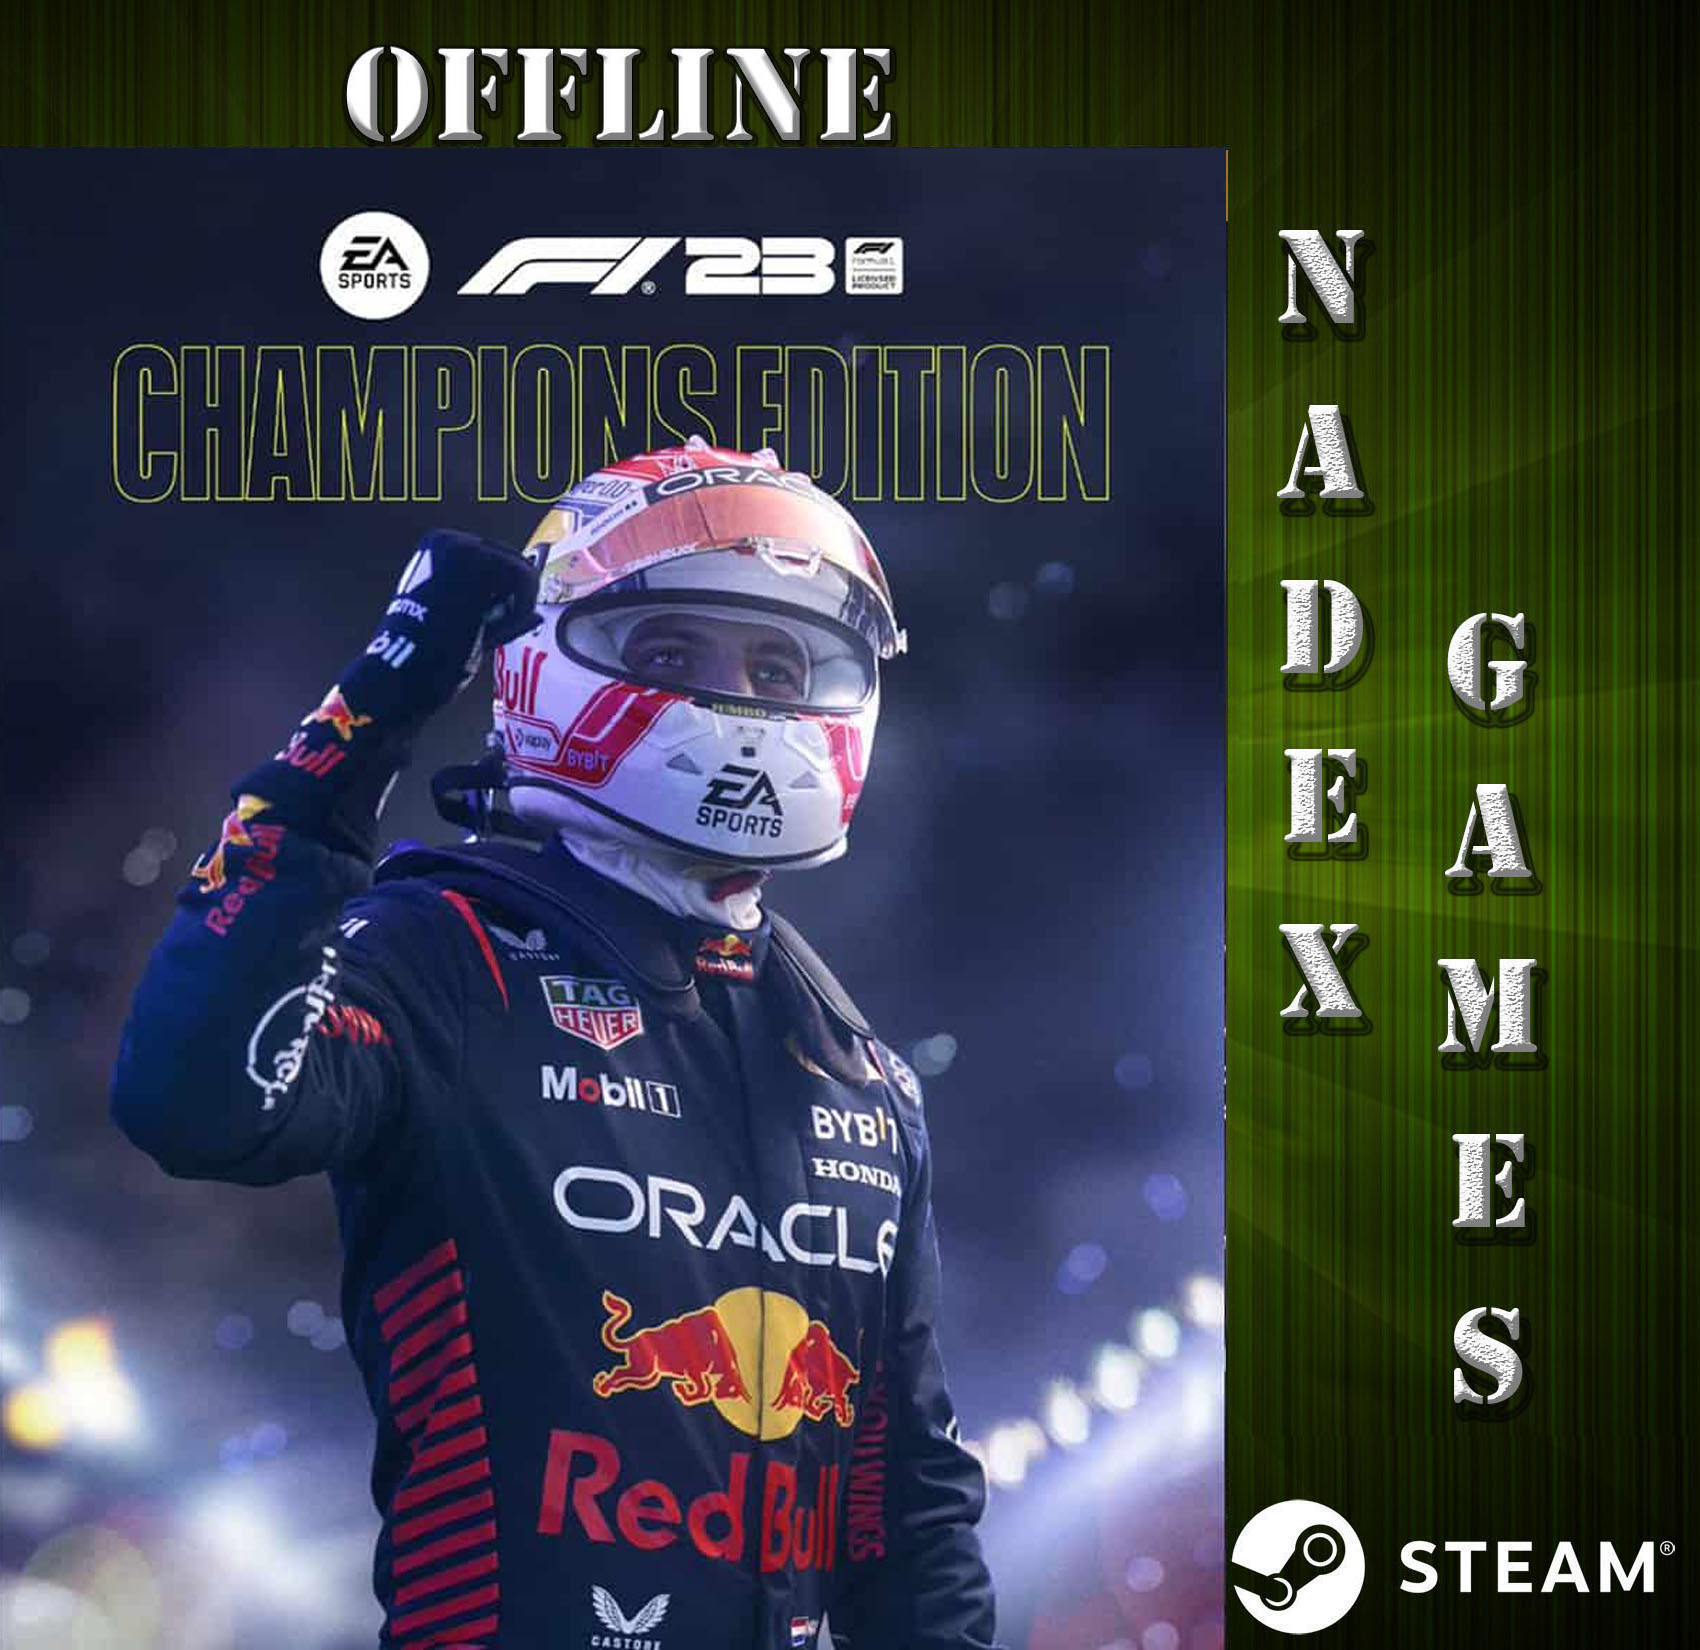 Jogo XBOX F1 23 Champions Deluxe Edition